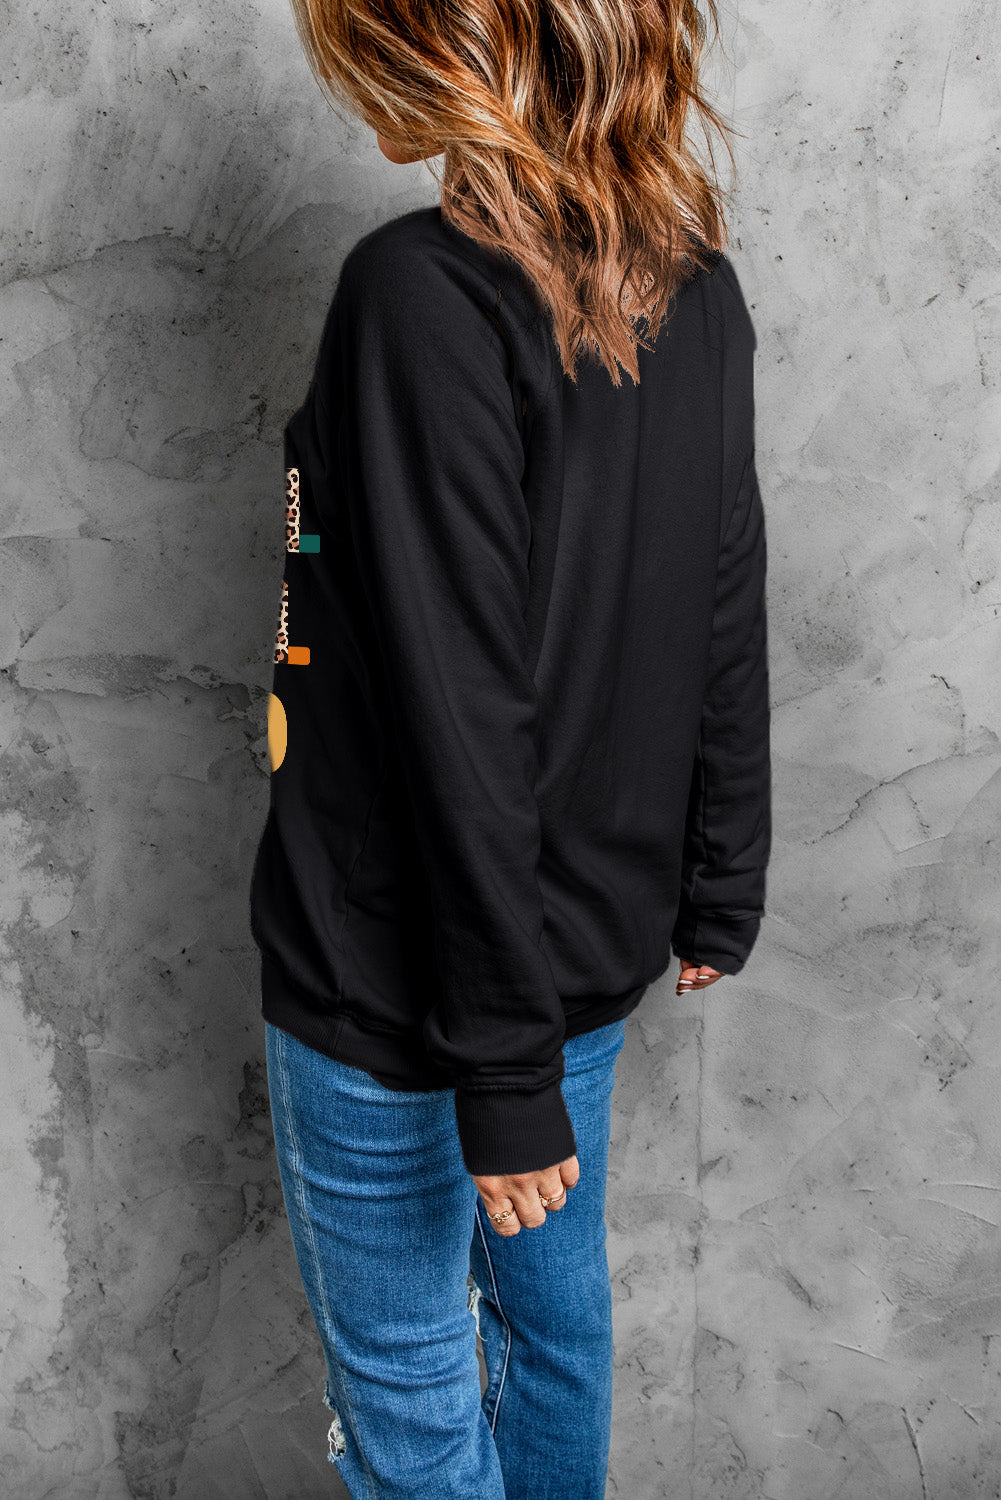 Black Leopard TANKFUL GRATEFUL BLESSED Graphic Sweatshirt Graphic Sweatshirts JT's Designer Fashion